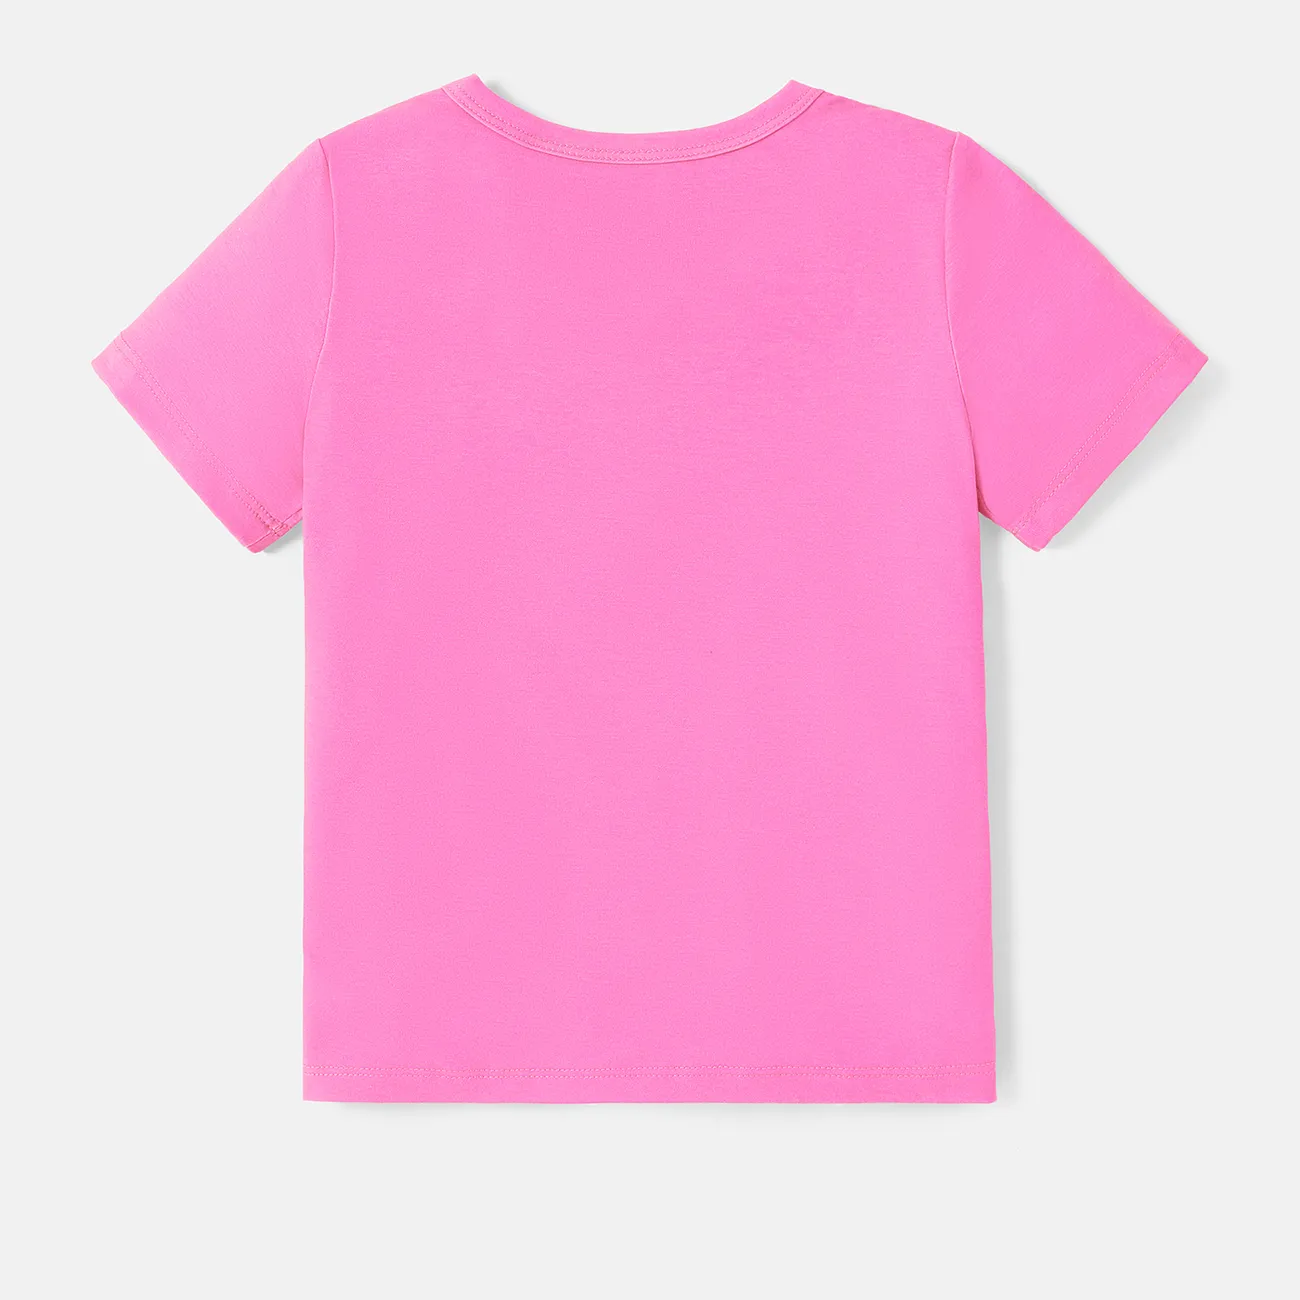 Disney Kleinkinder/Kind Mädchen/Junge Figur Print Naia™ Kurzarm-T-Shirt Rosa big image 1